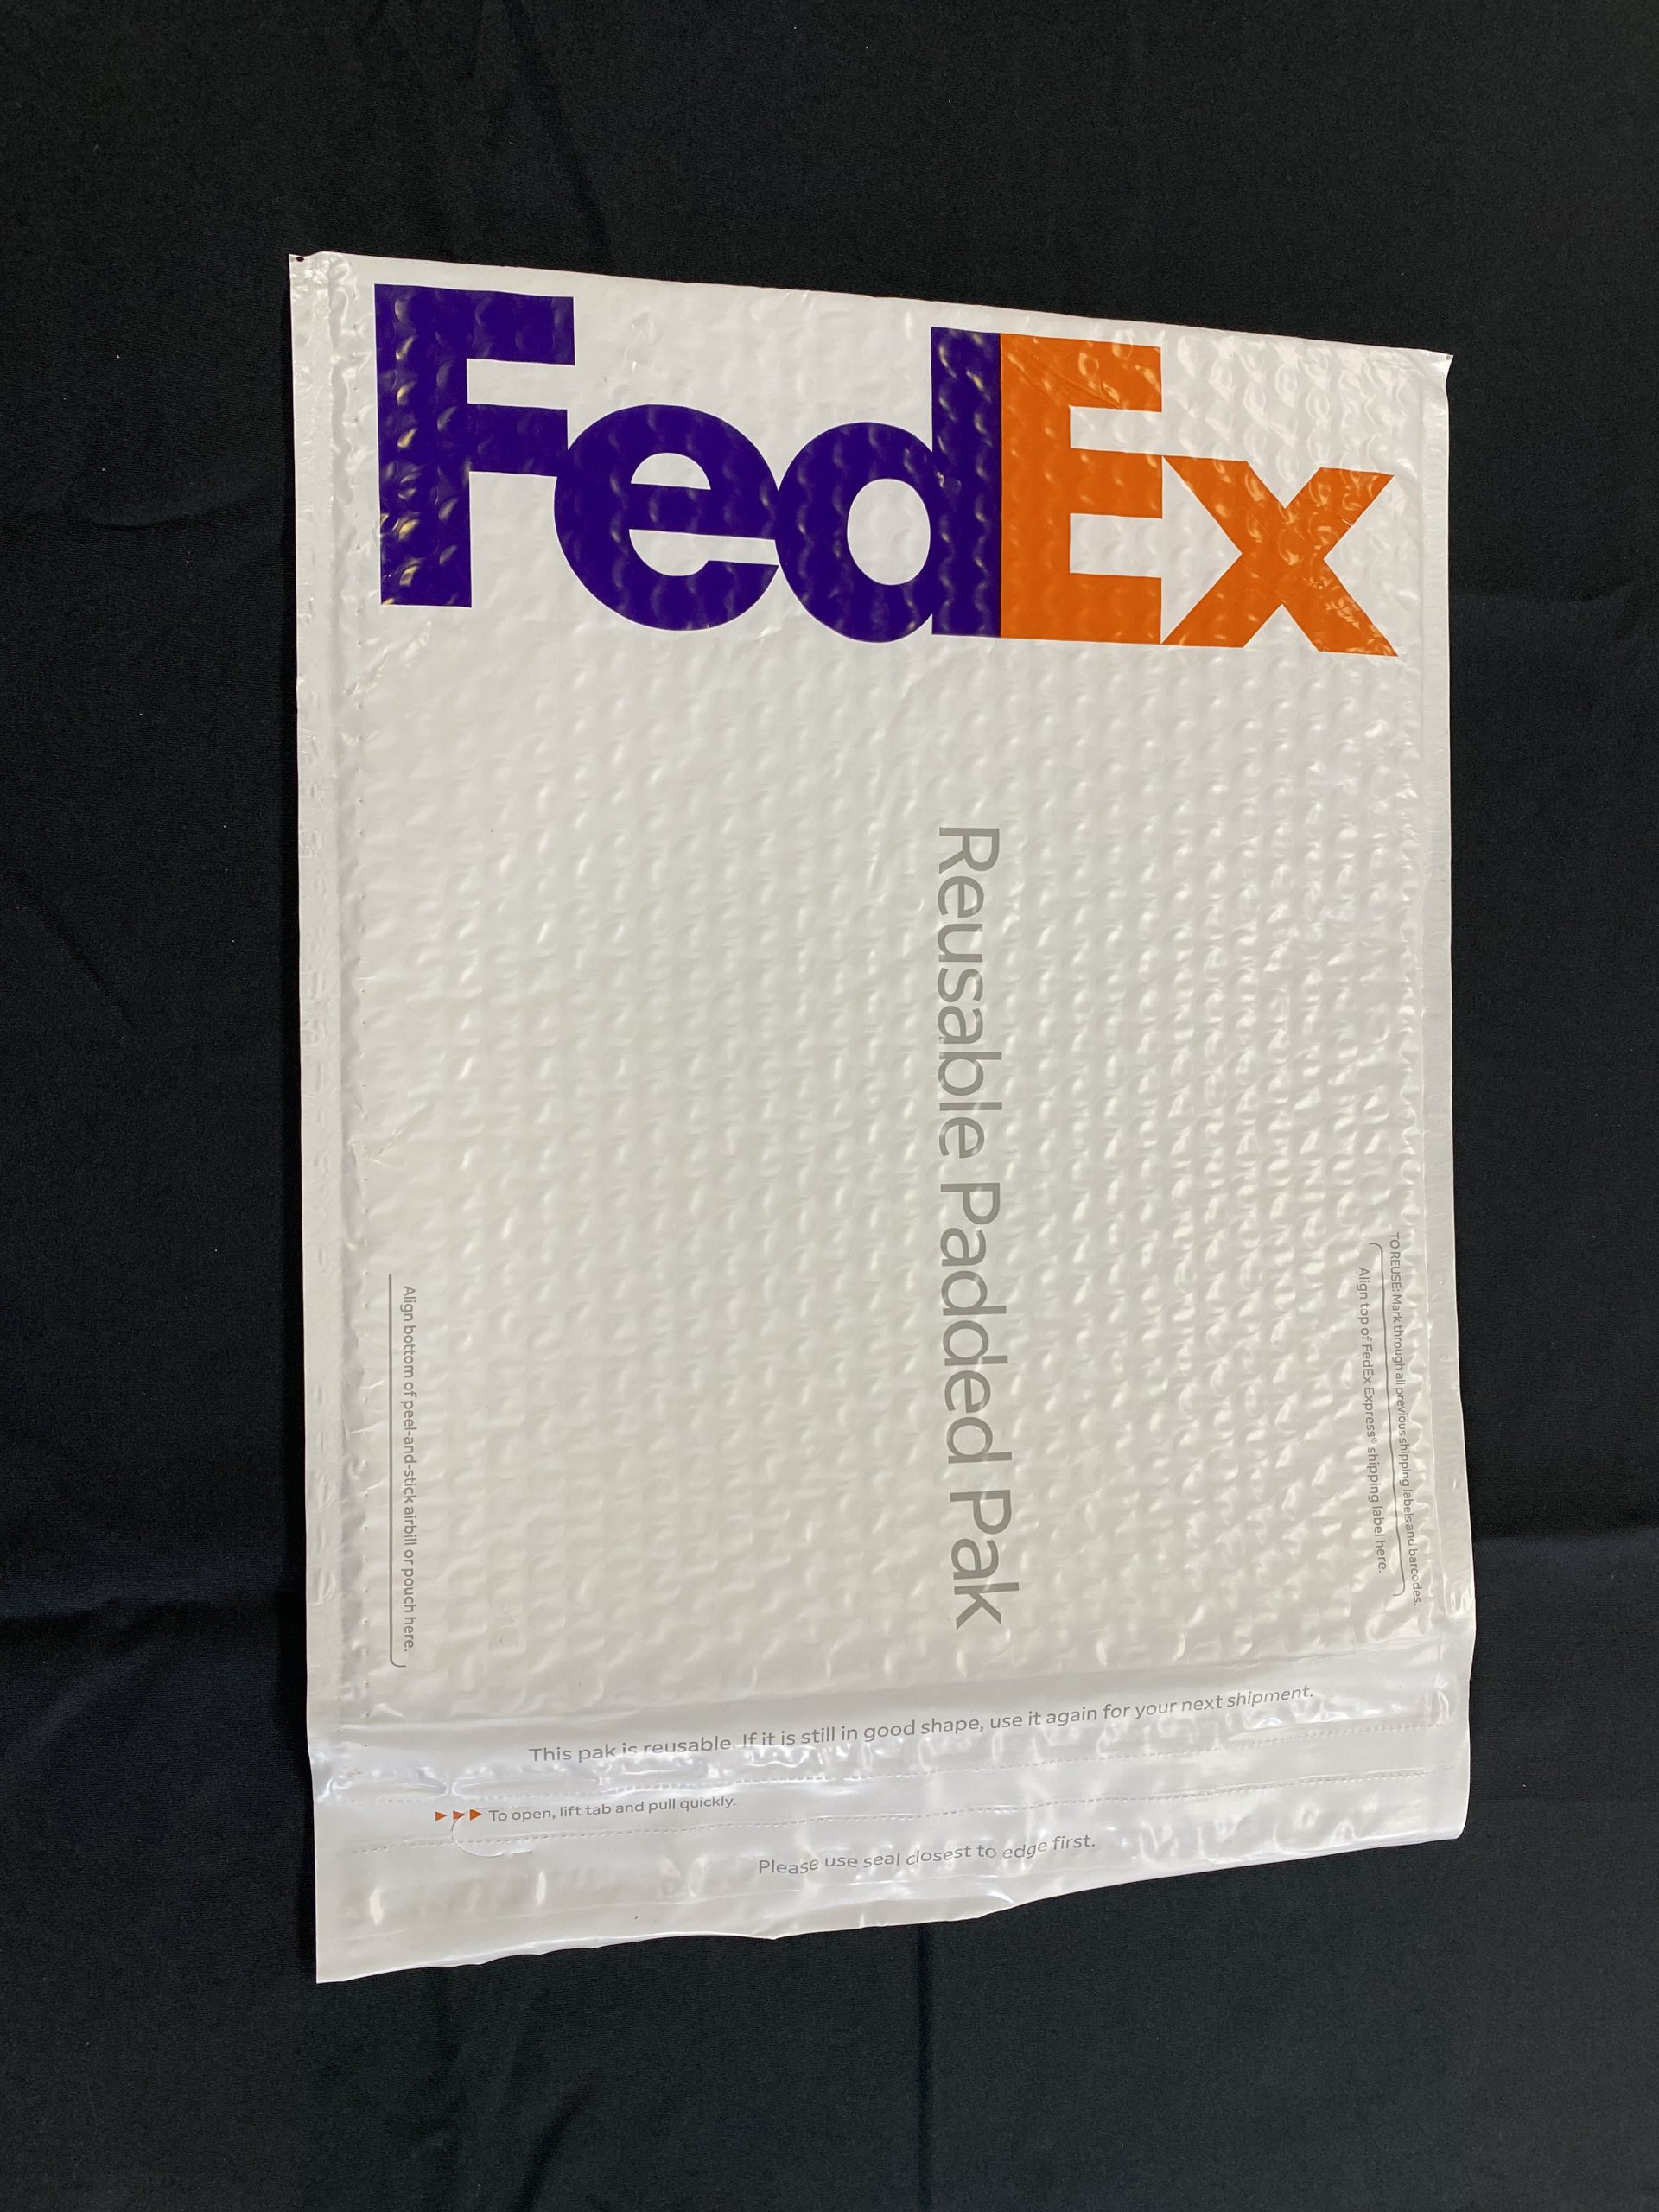 FedEx Envelope